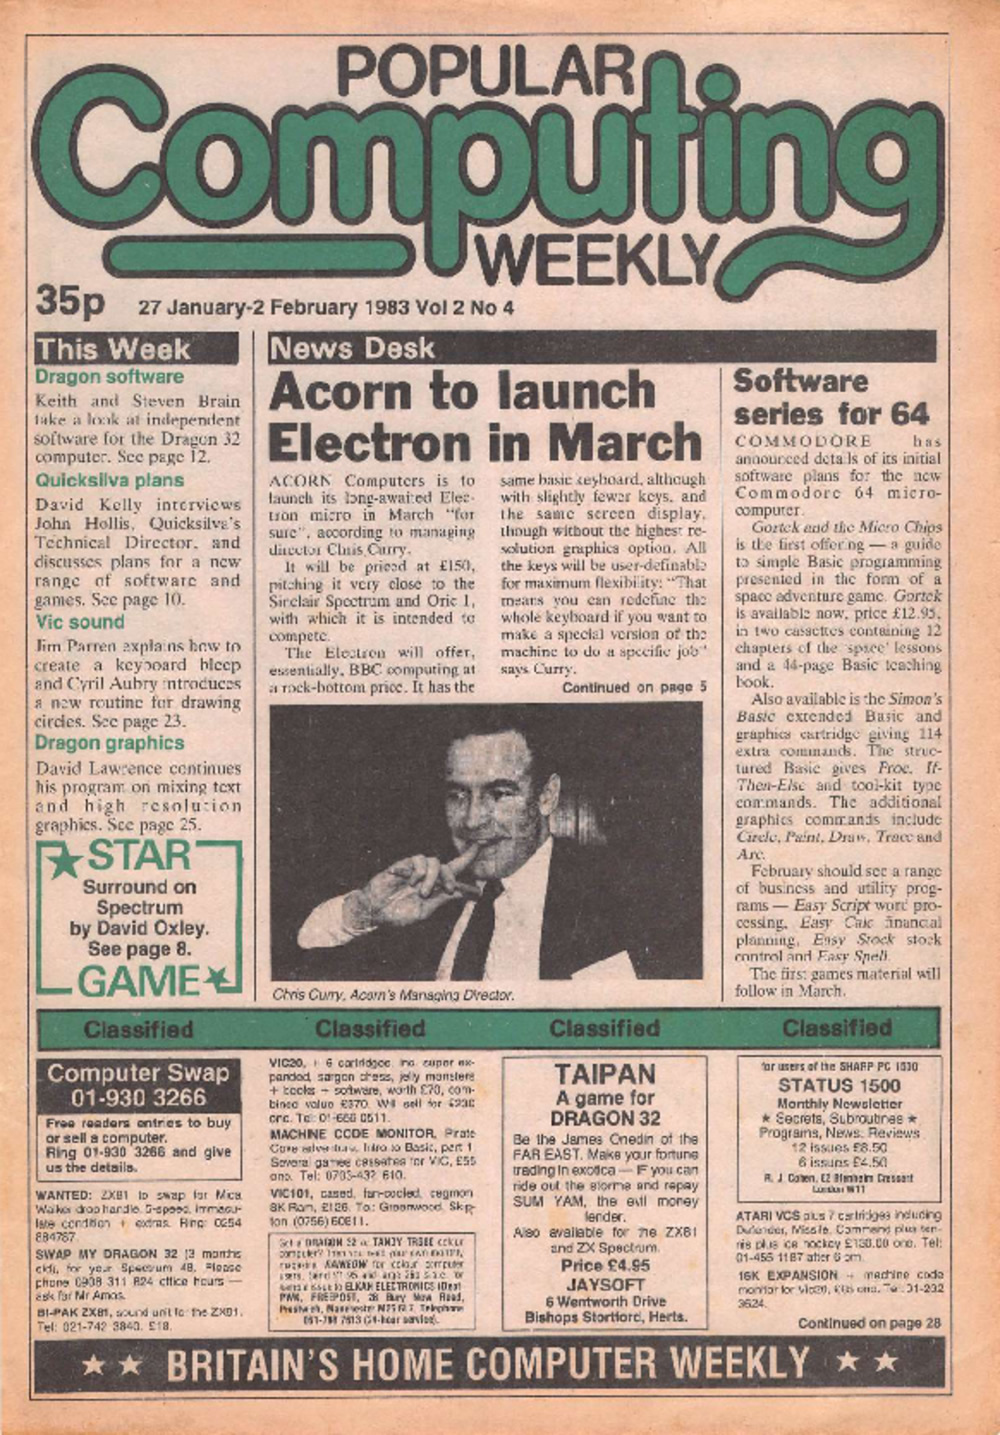 Article: Popular Computing Weekly Vol 2 No 04 - 27 January-3 February 1983